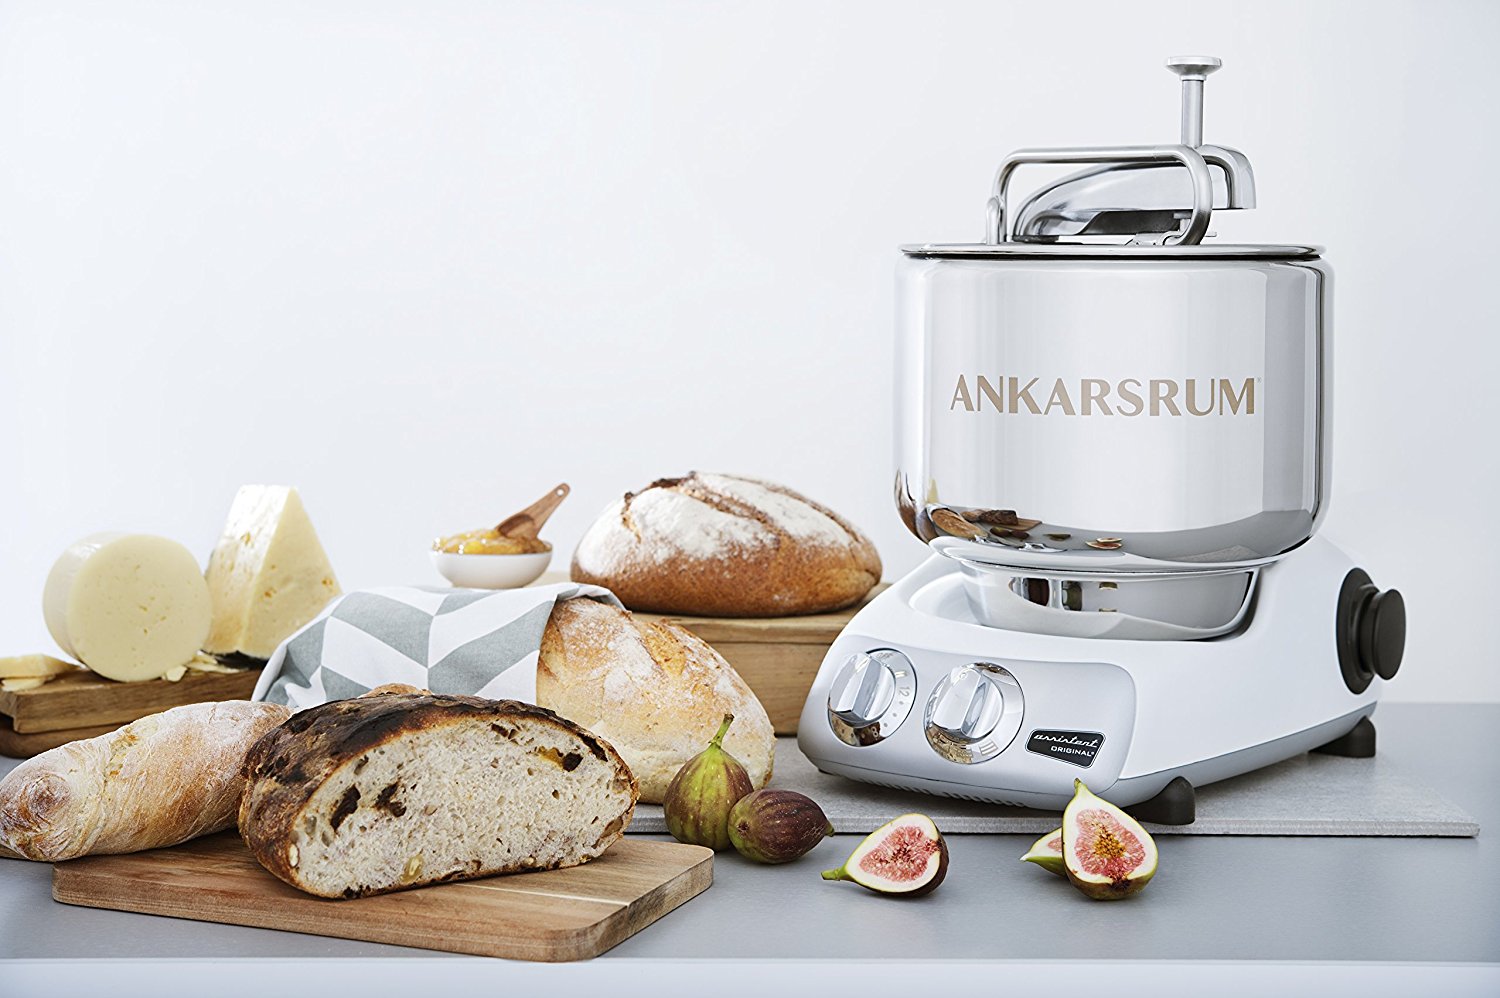  Ankarsrum Original 6230 Black Diamond and Stainless Steel 7  Liter Stand Mixer : Home & Kitchen